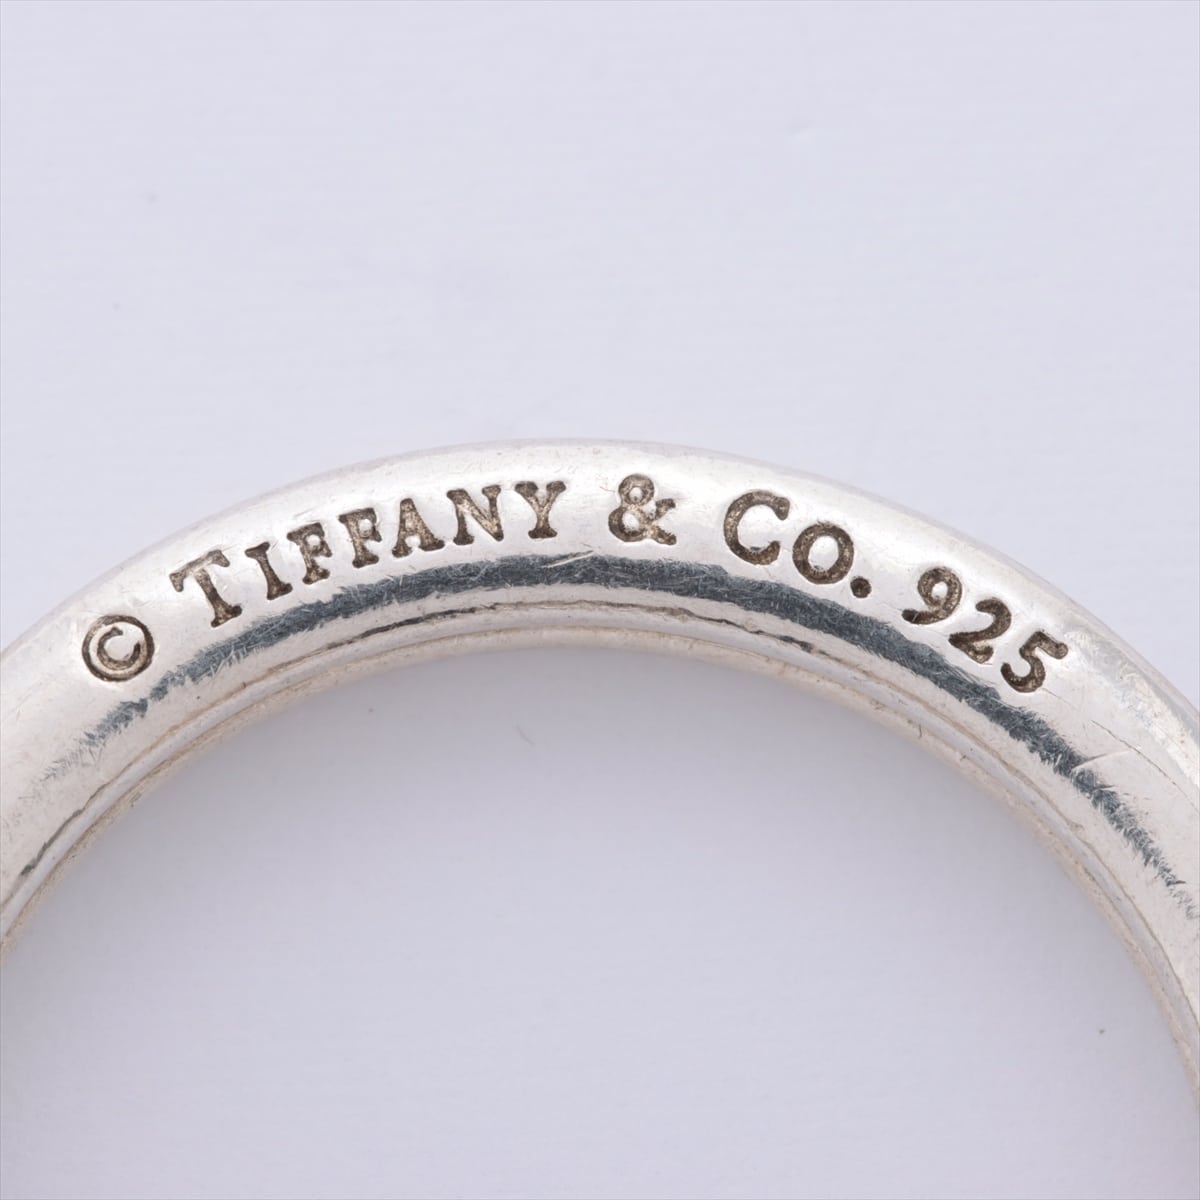 Tiffany Heart Tag Key holder 925 Silver